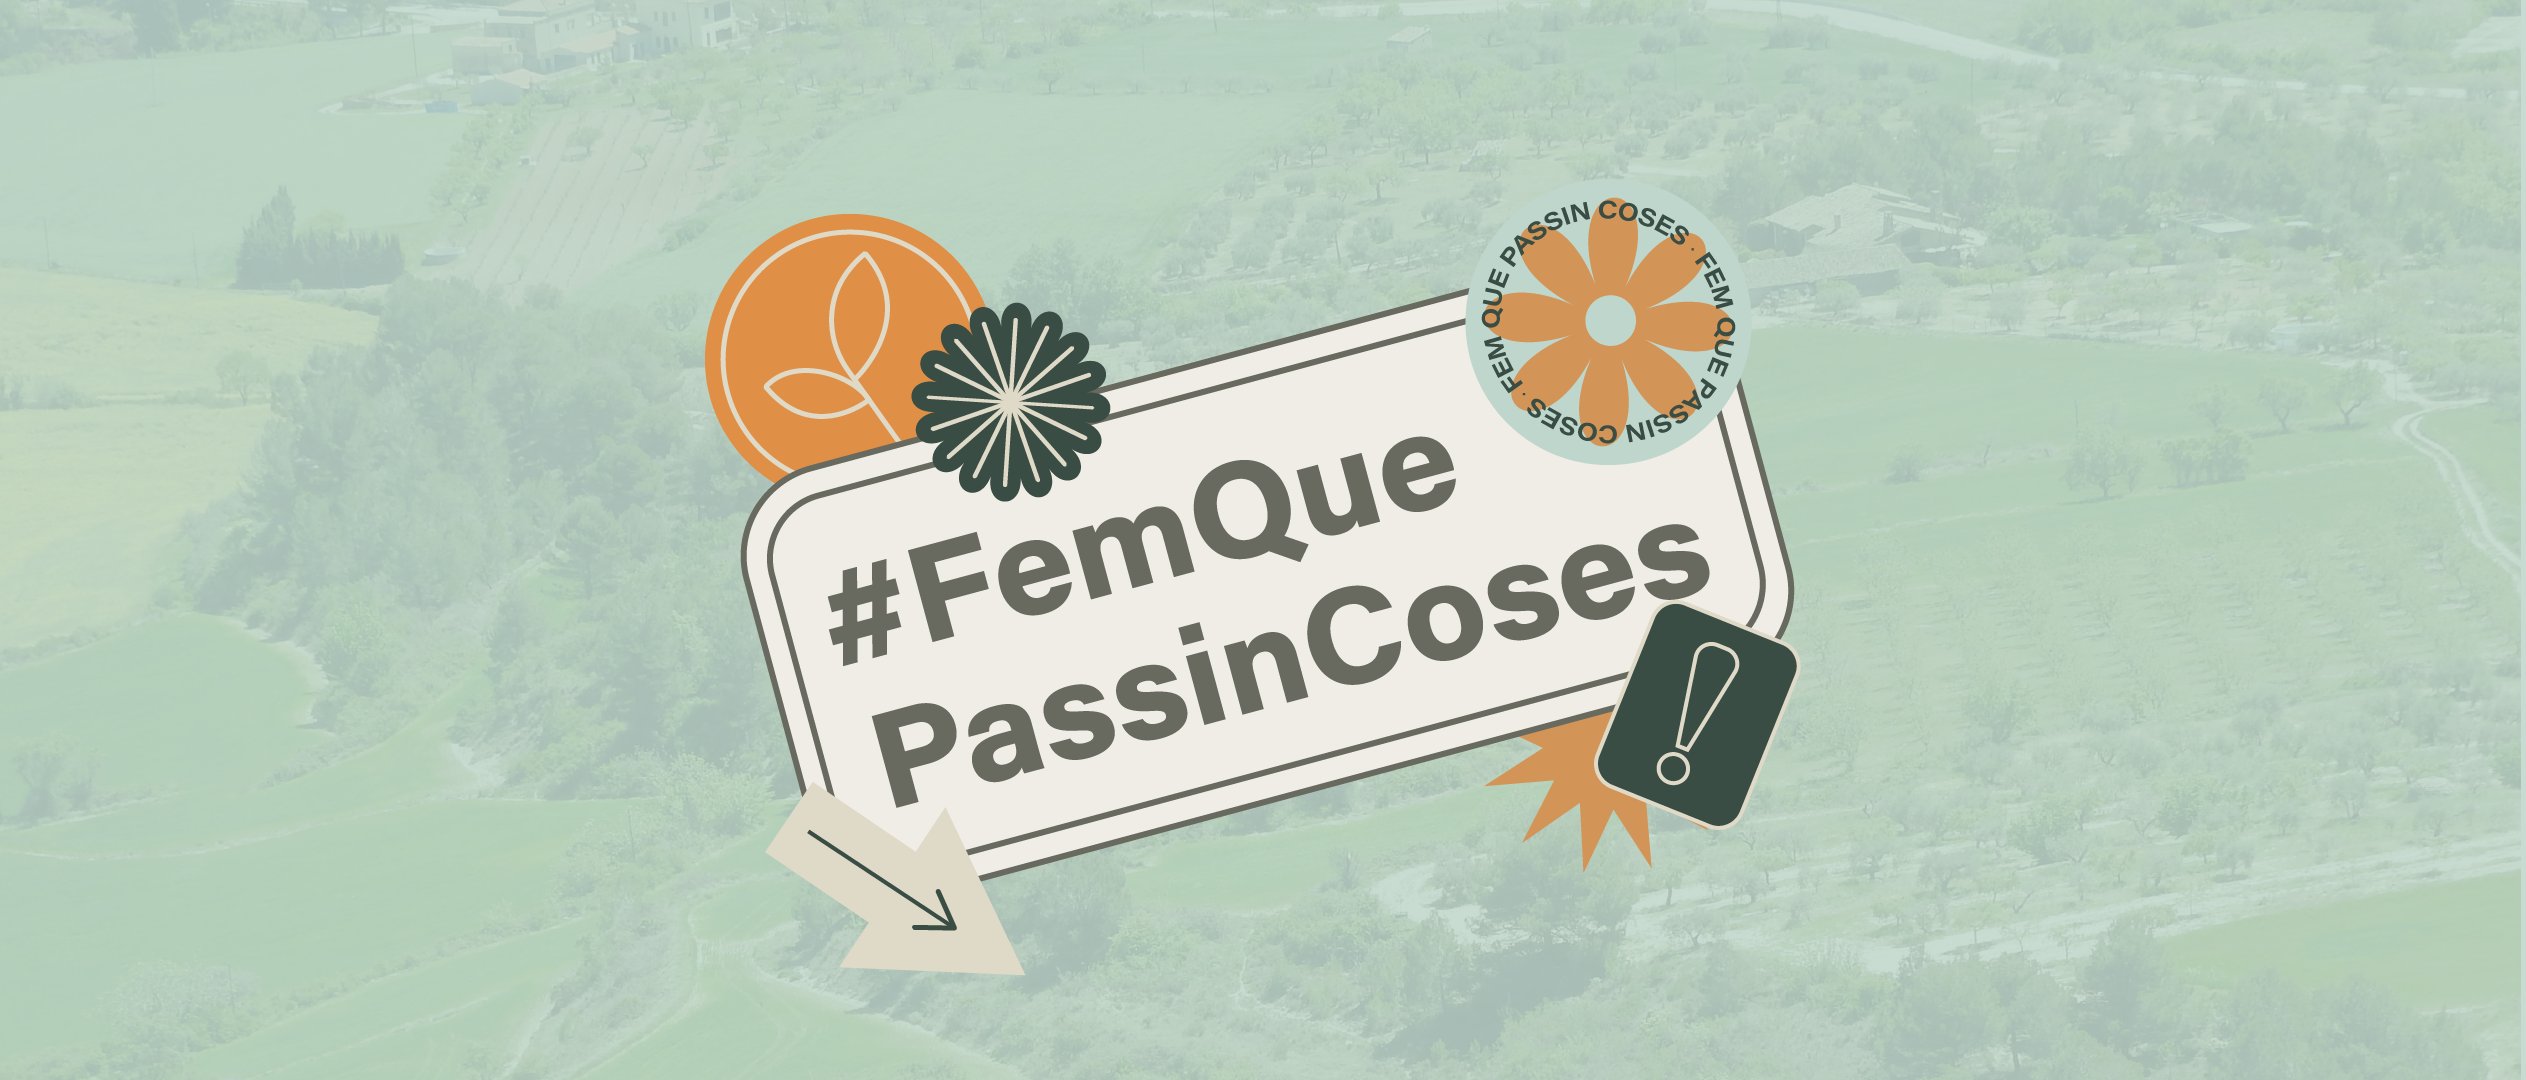 Arrenca la campanya #FemQuePassinCoses